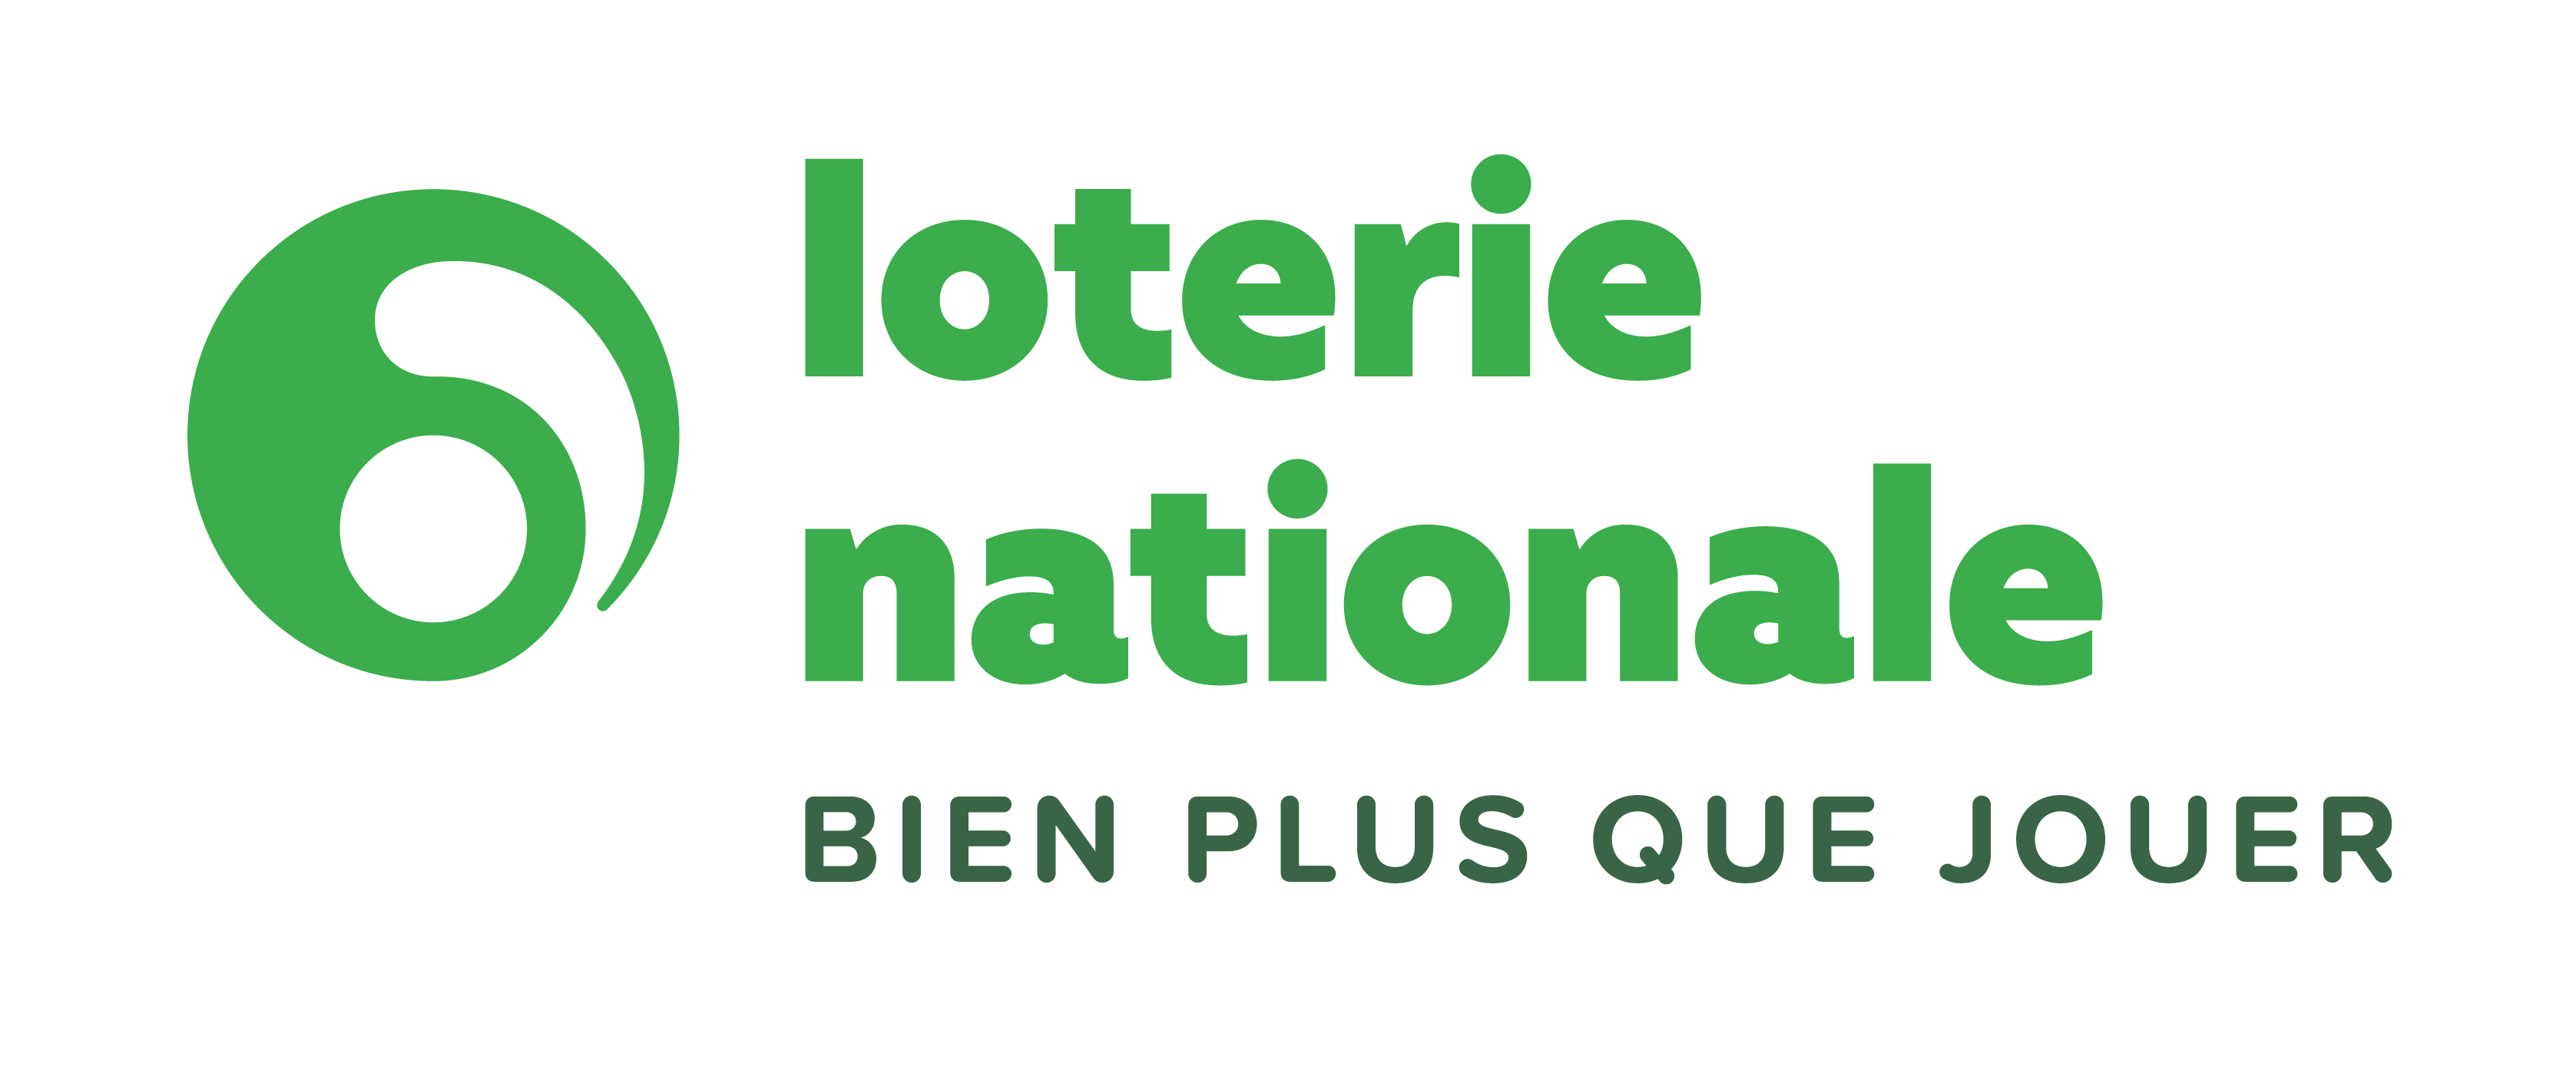 La loterie nationale